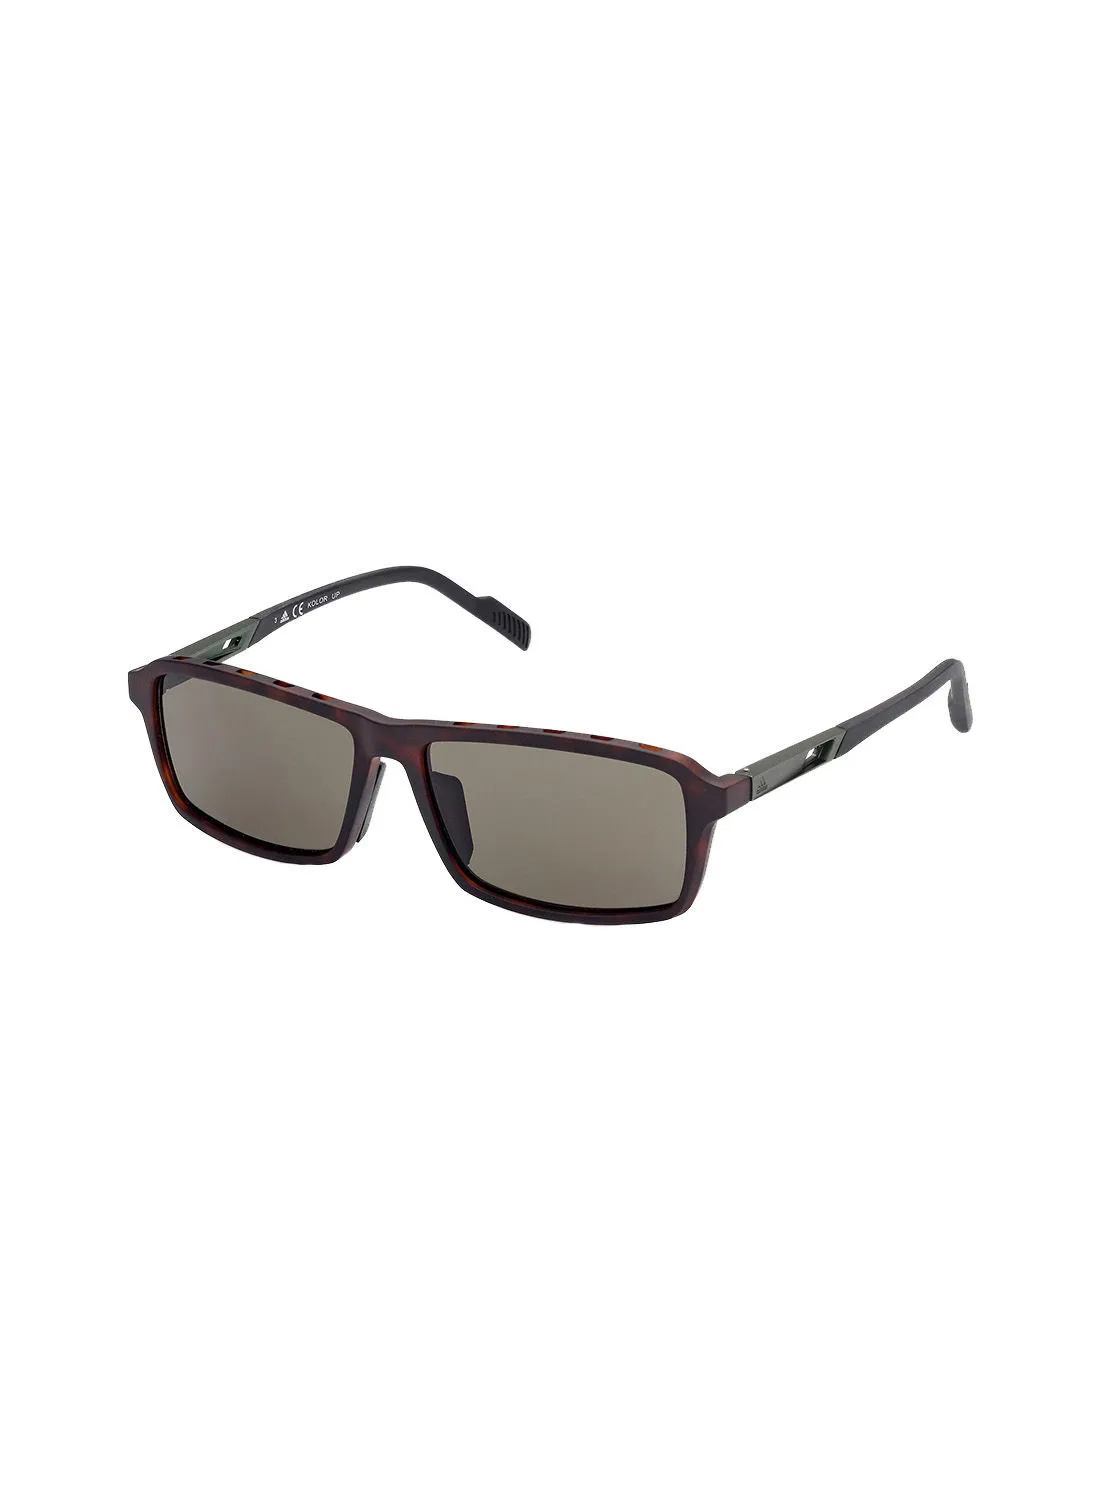 Adidas Rectangular Sunglasses SP004952N59